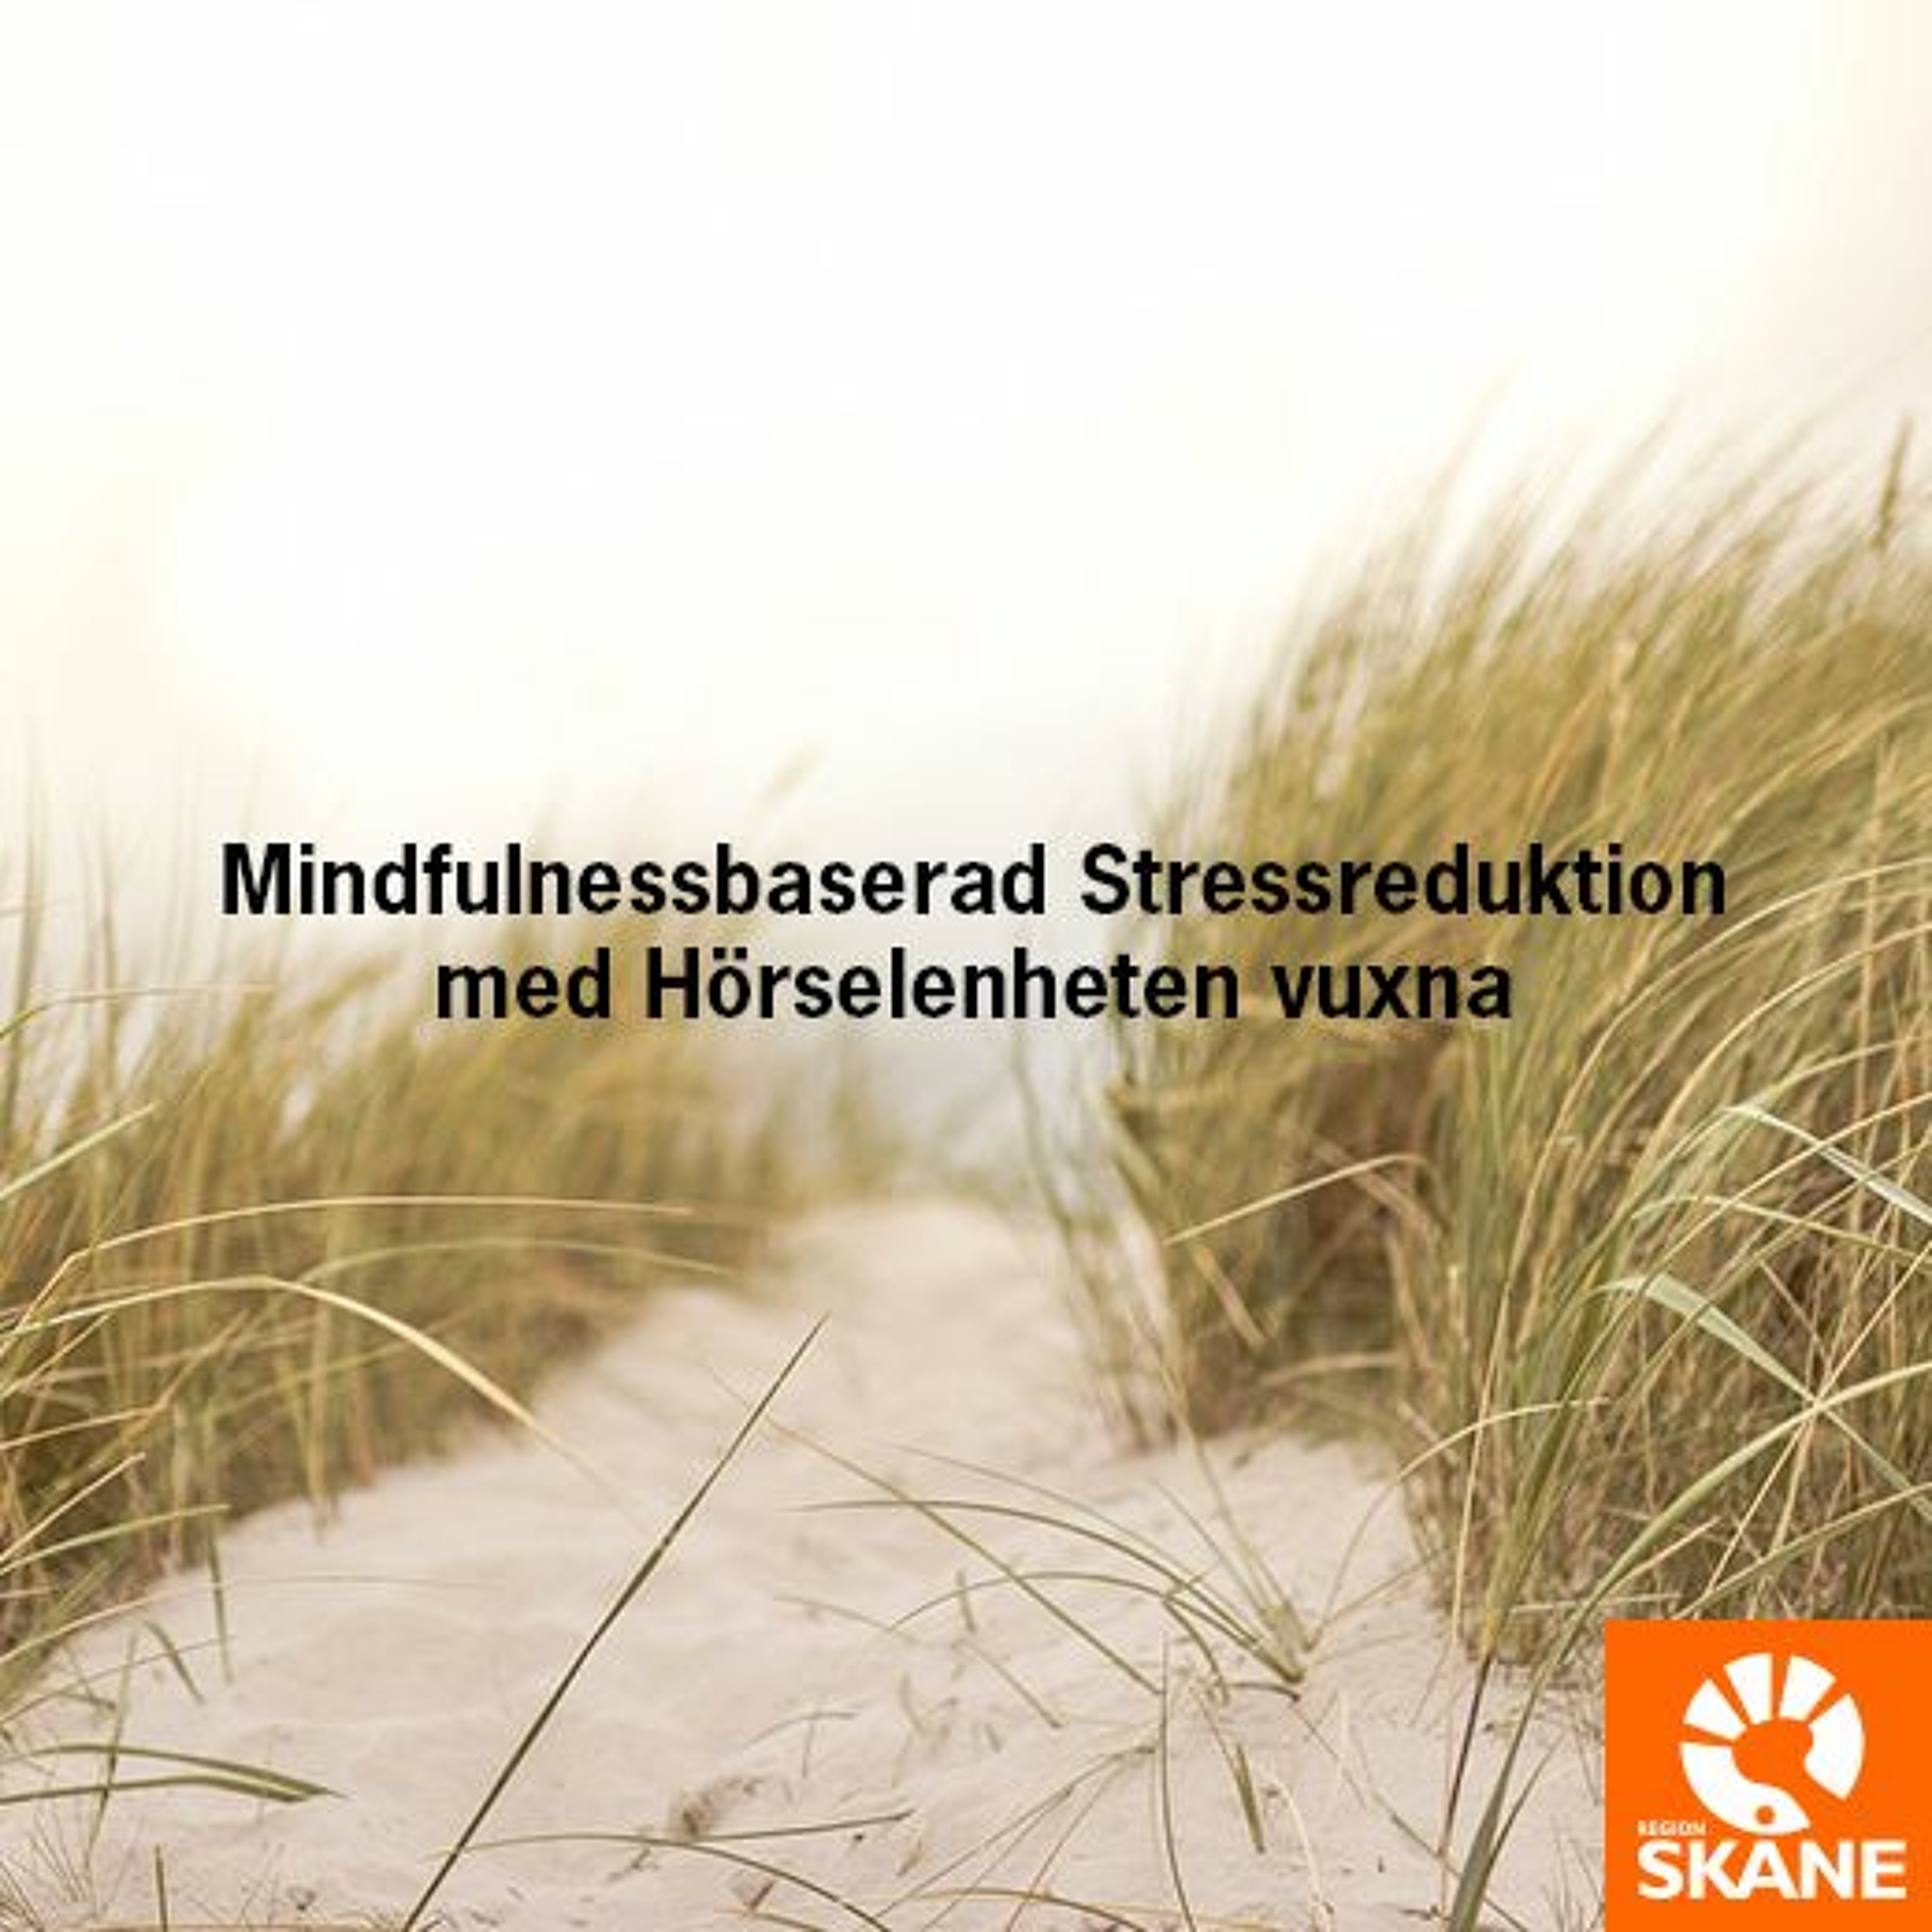 Mindfulnessbaserad Stressreduktion - Yoga, stående